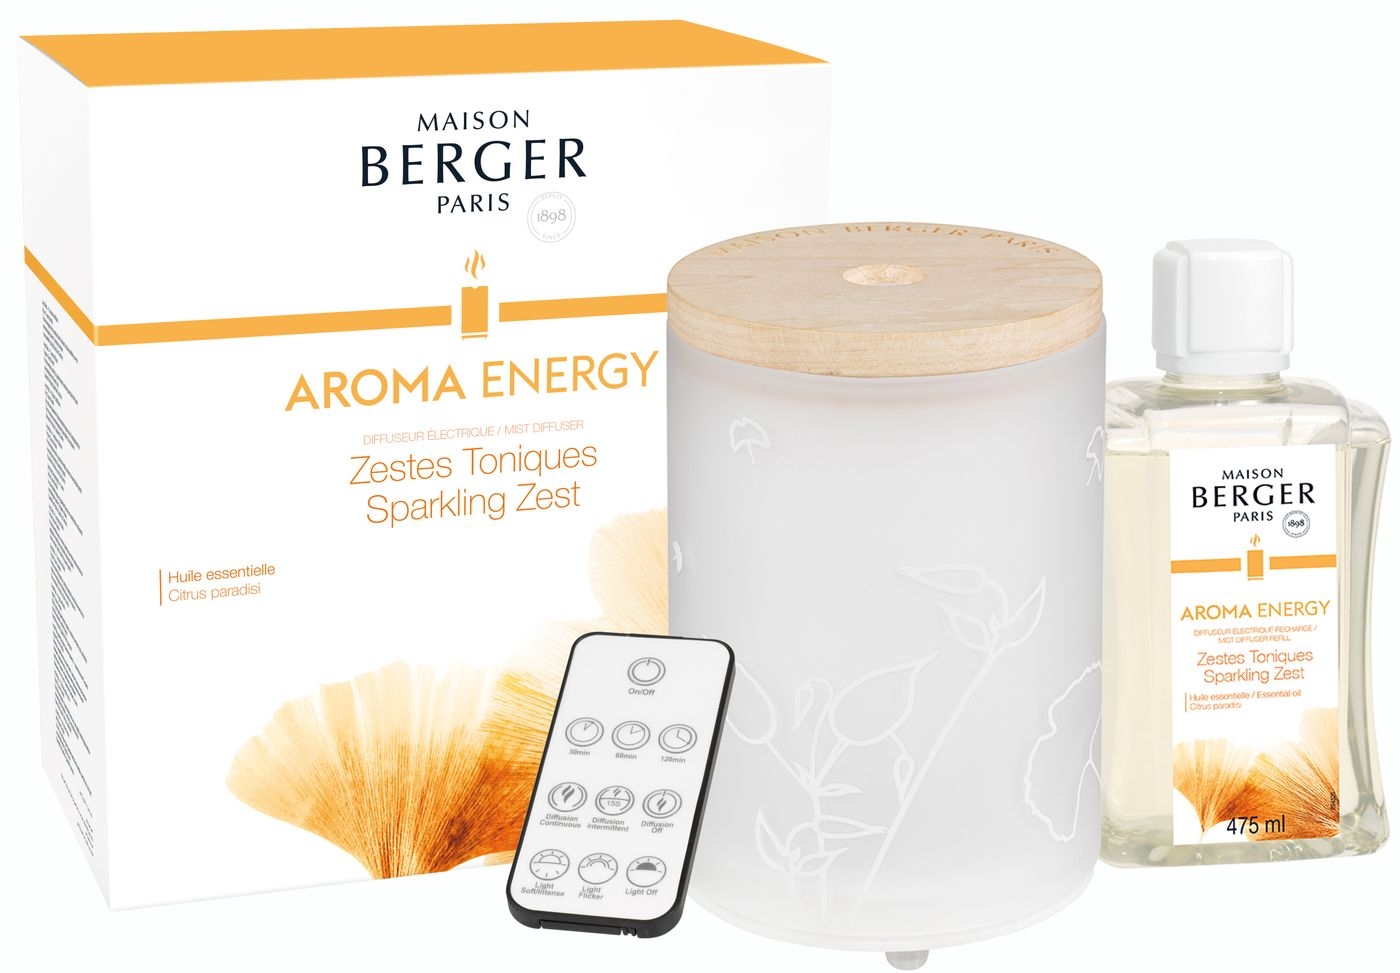 Recharge Diffuseur Voiture Lampe Berger Aroma Energy Zestes Toniques - 9,00€